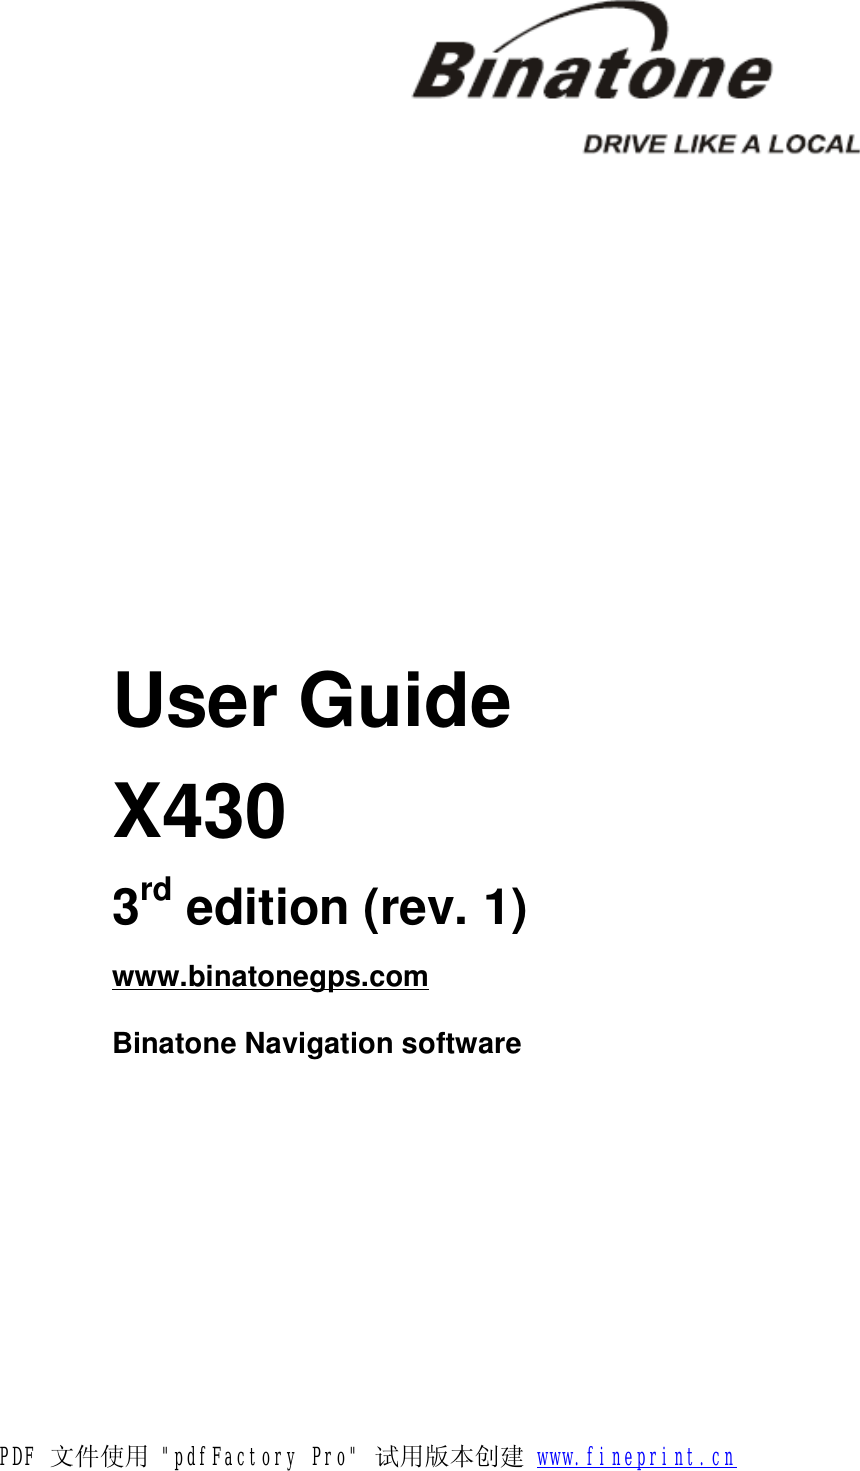                                                                  User Guide  X430  3rd edition (rev. 1)  www.binatonegps.com  Binatone Navigation software  PDF 文件使用 &quot;pdfFactory Pro&quot; 试用版本创建 www.fineprint.cn